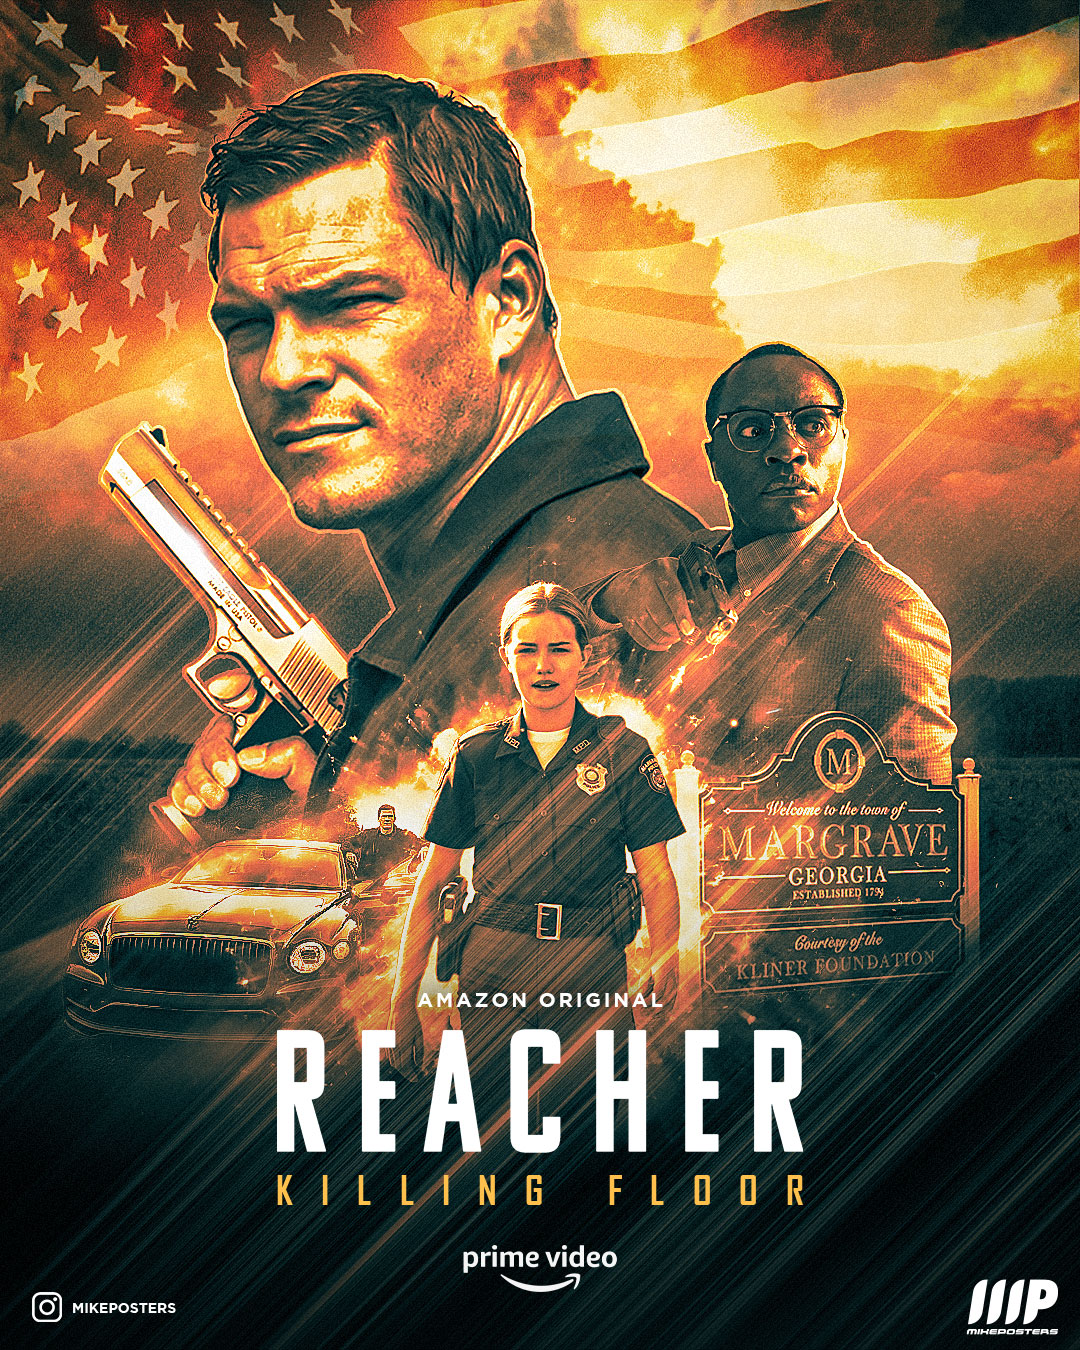 Reacher: Killing Floor